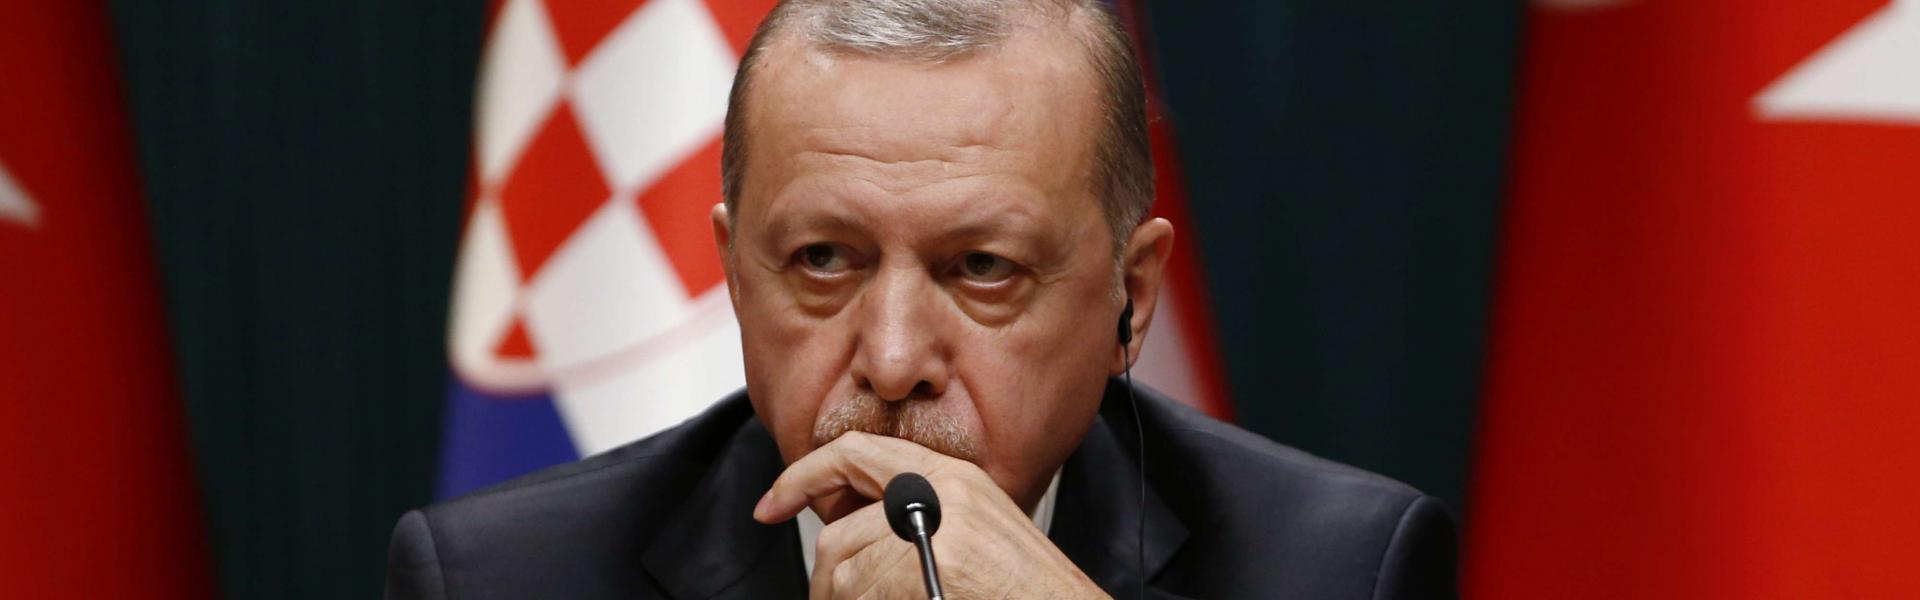 Can Turkey’s Erdoğan accept defeat? - Politico